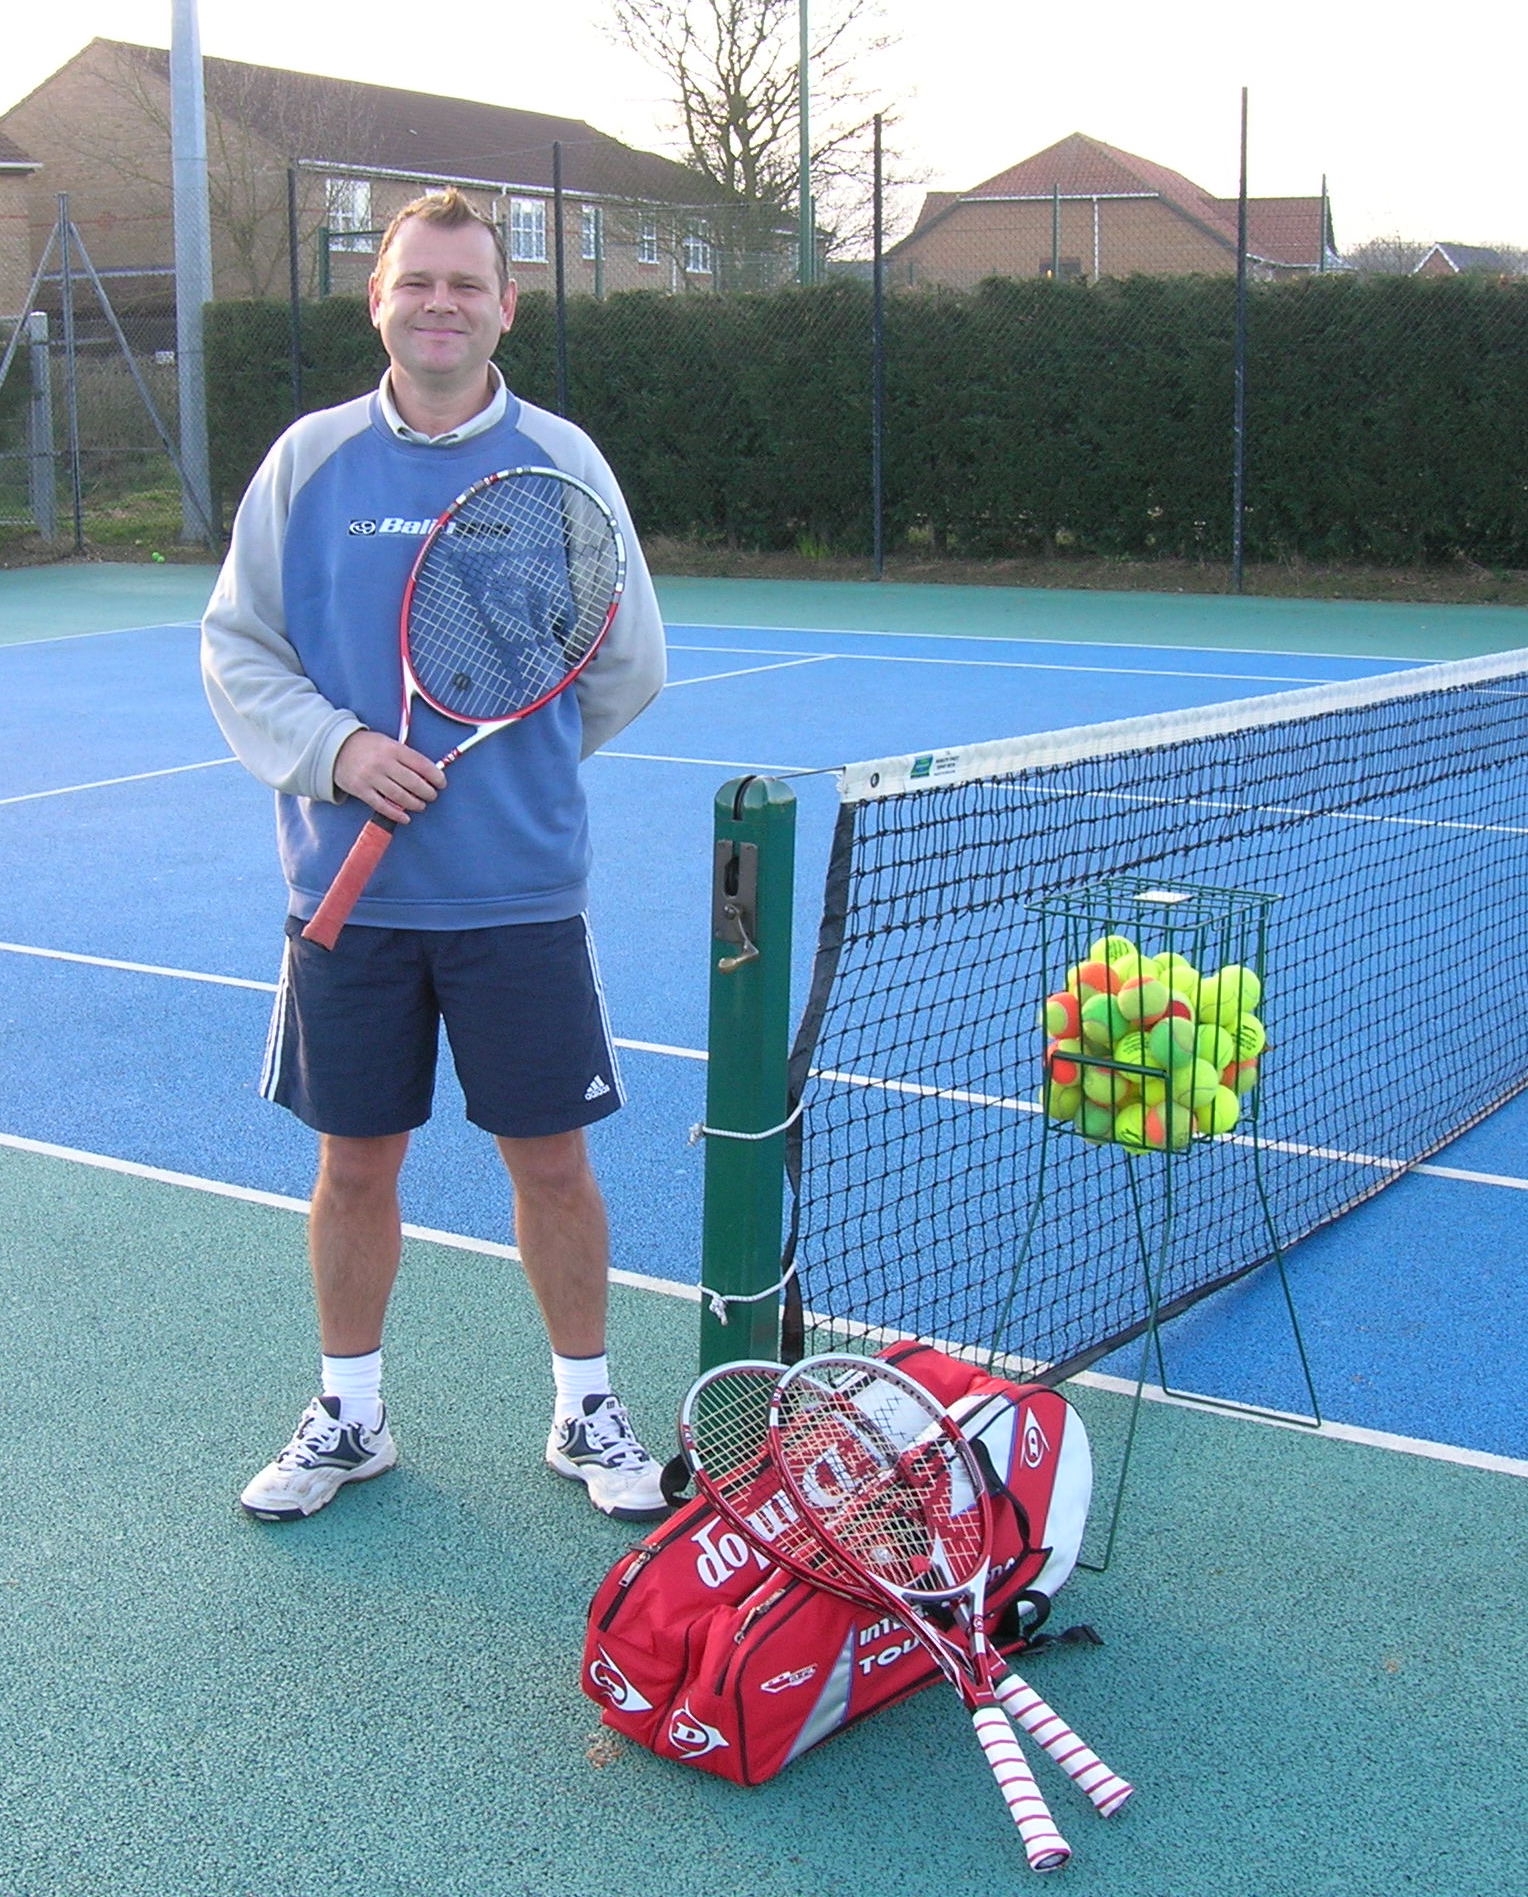 Martin Denny, tennis coach at Woodbridge Tennis Club in Suffolk